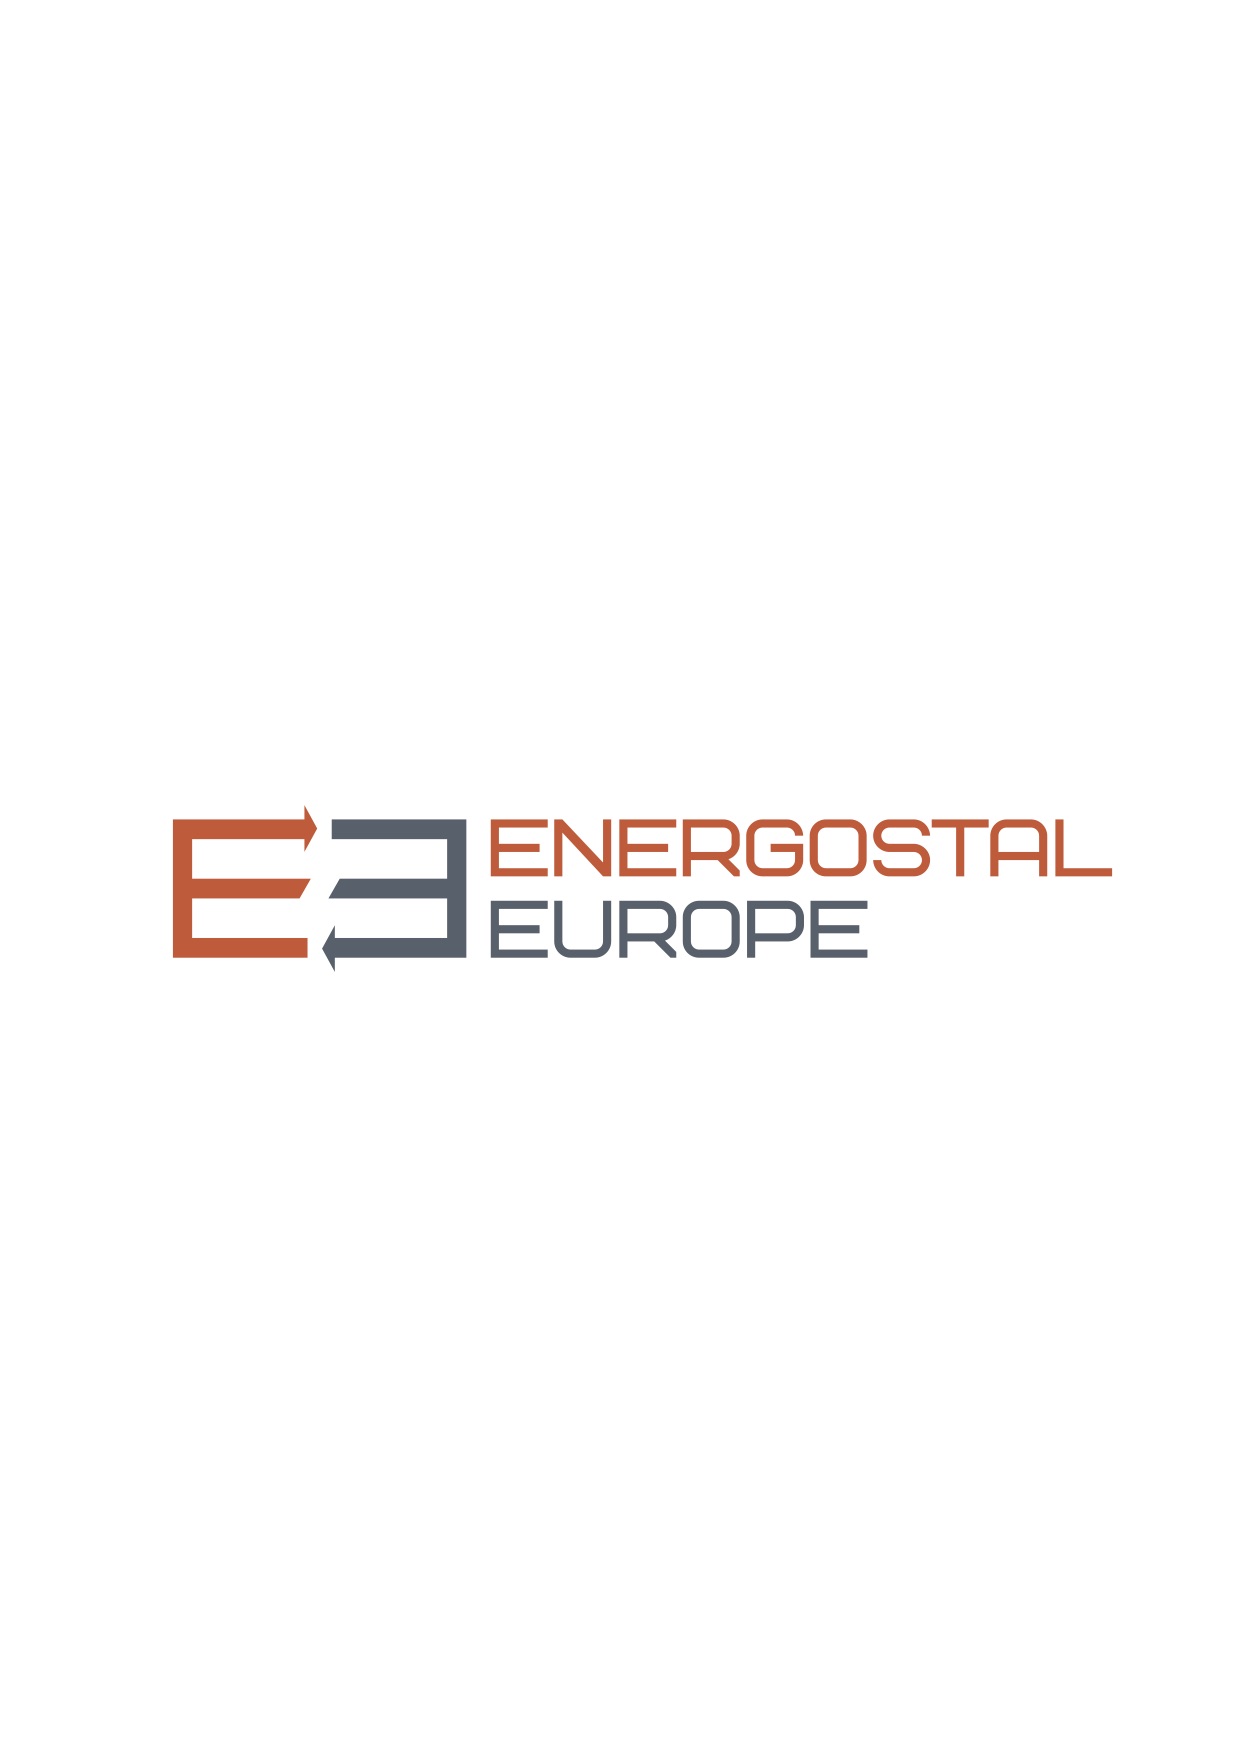 Energostal-Europe s.r.o